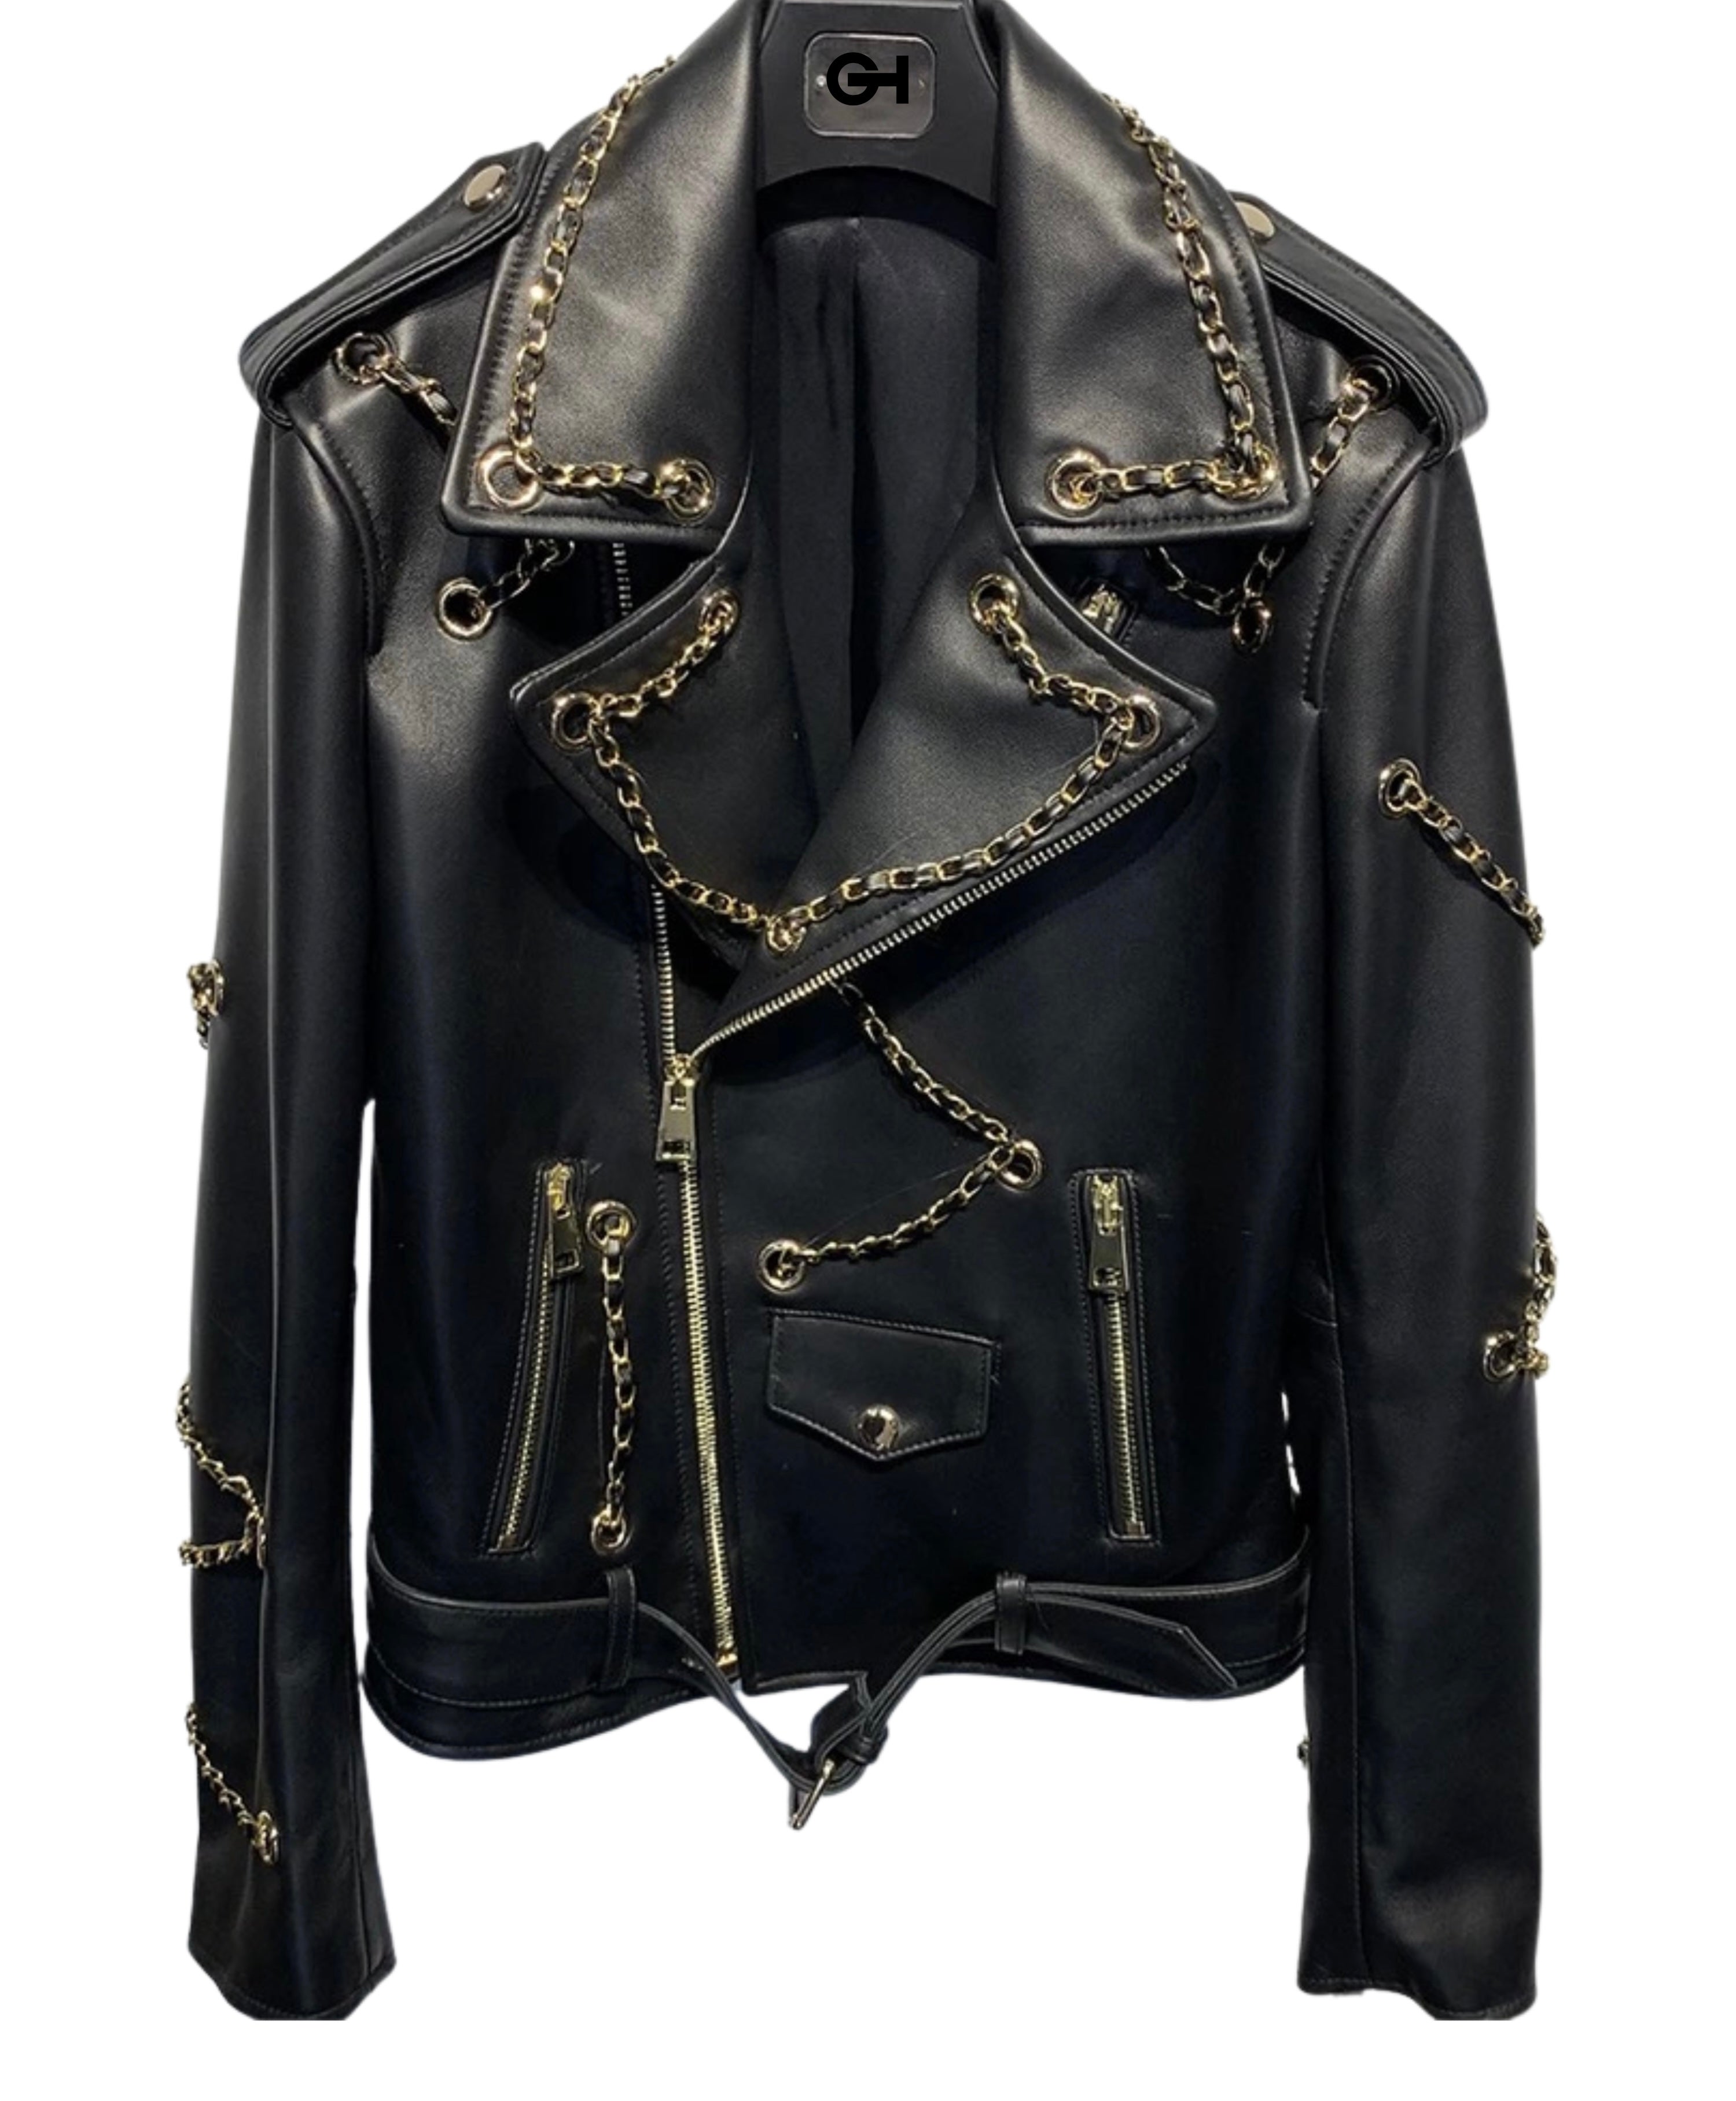 GOLDxTEAL chains leather biker jacket.